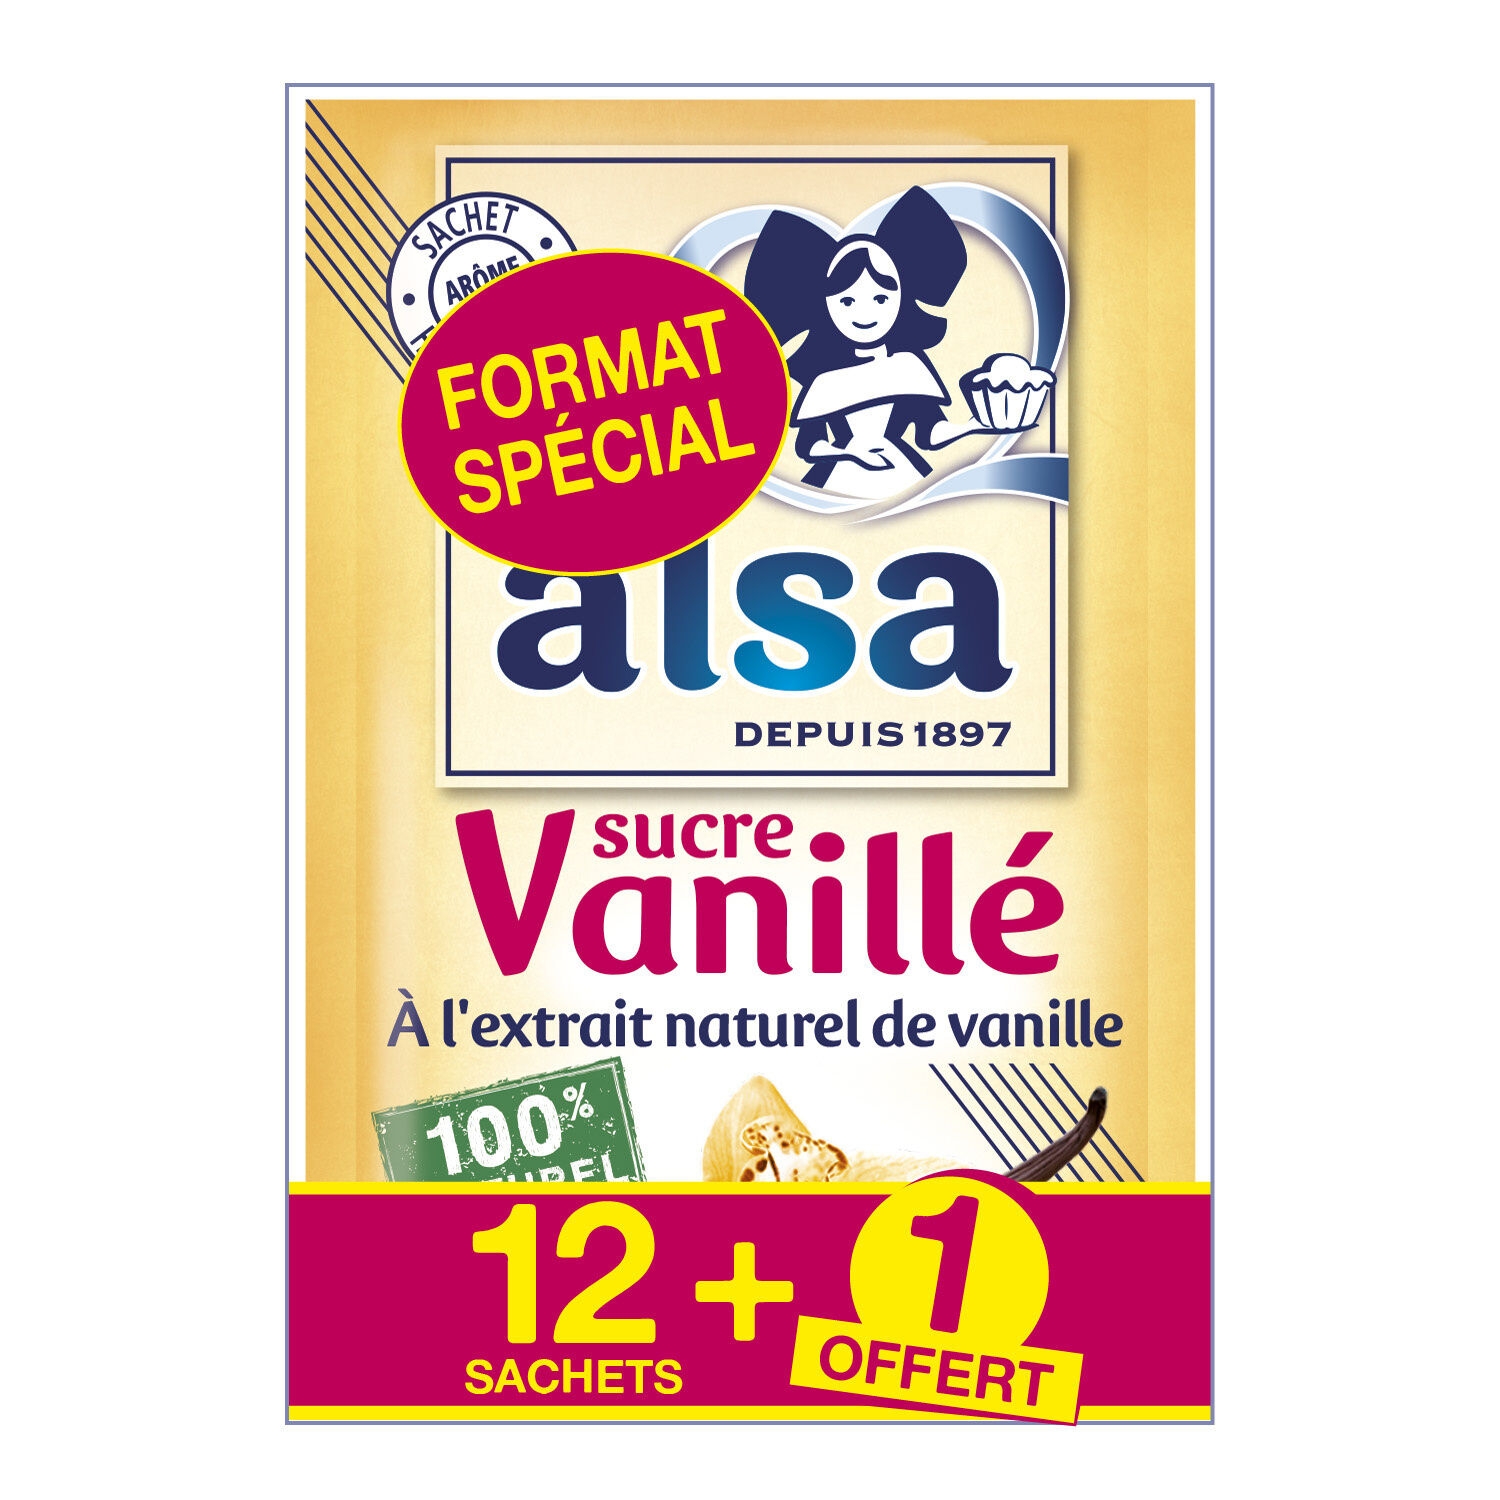 Extrait de vanille - alsa - depuis 1897